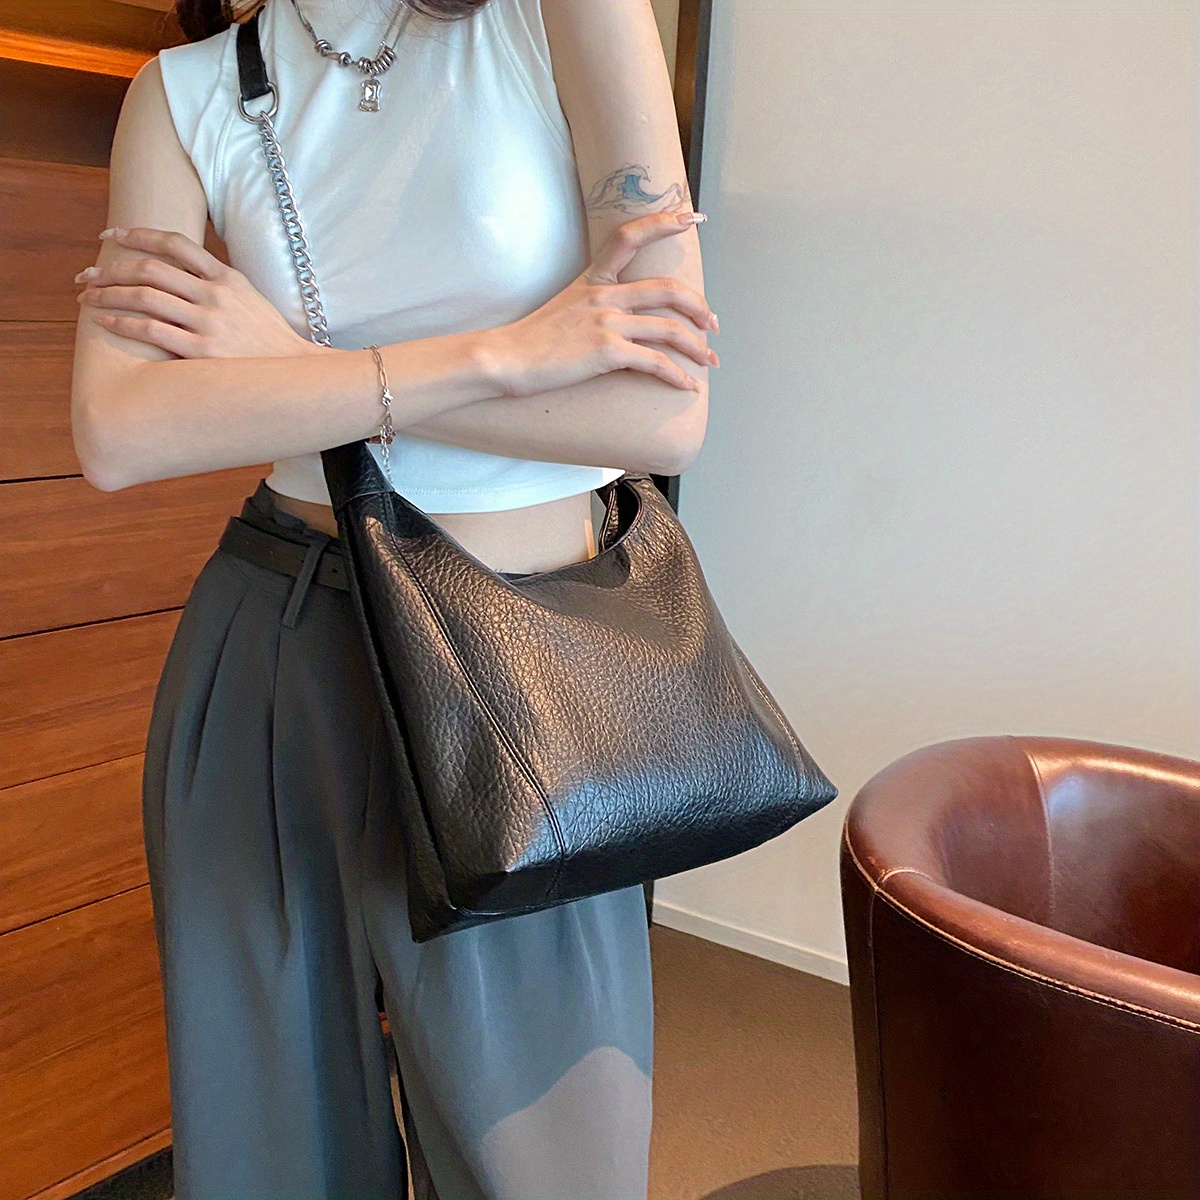 Louis Vuitton Vintage Two-Tone Sac Verseau Epi Leather Shoulder Bag, Best  Price and Reviews